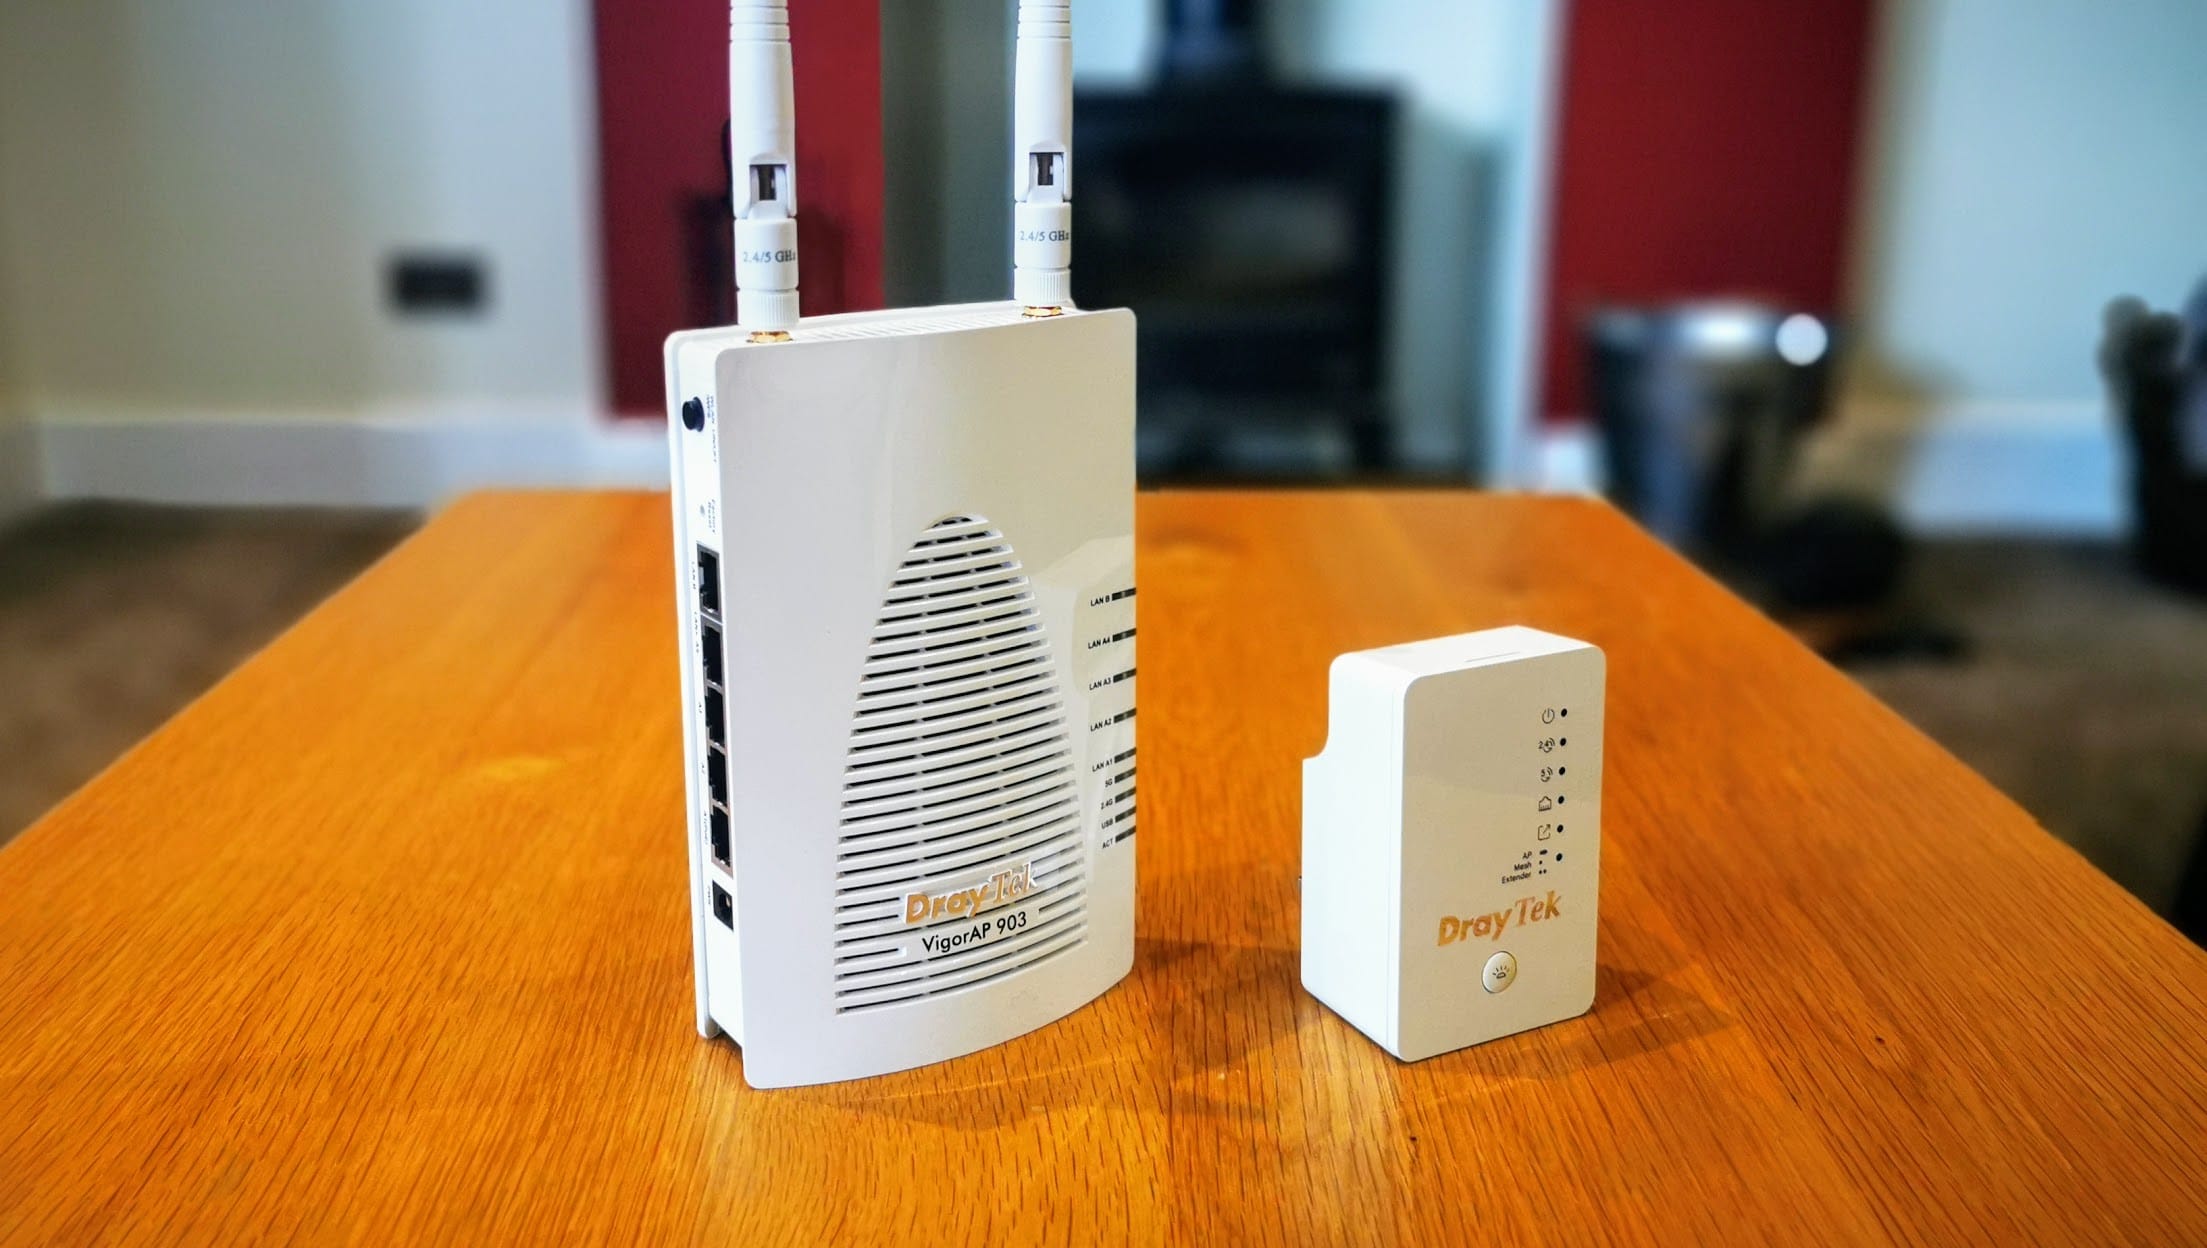 Draytek VigorAP 903 & VigorAP 802 Review – A flexible small business mesh Wi-Fi and access point solution